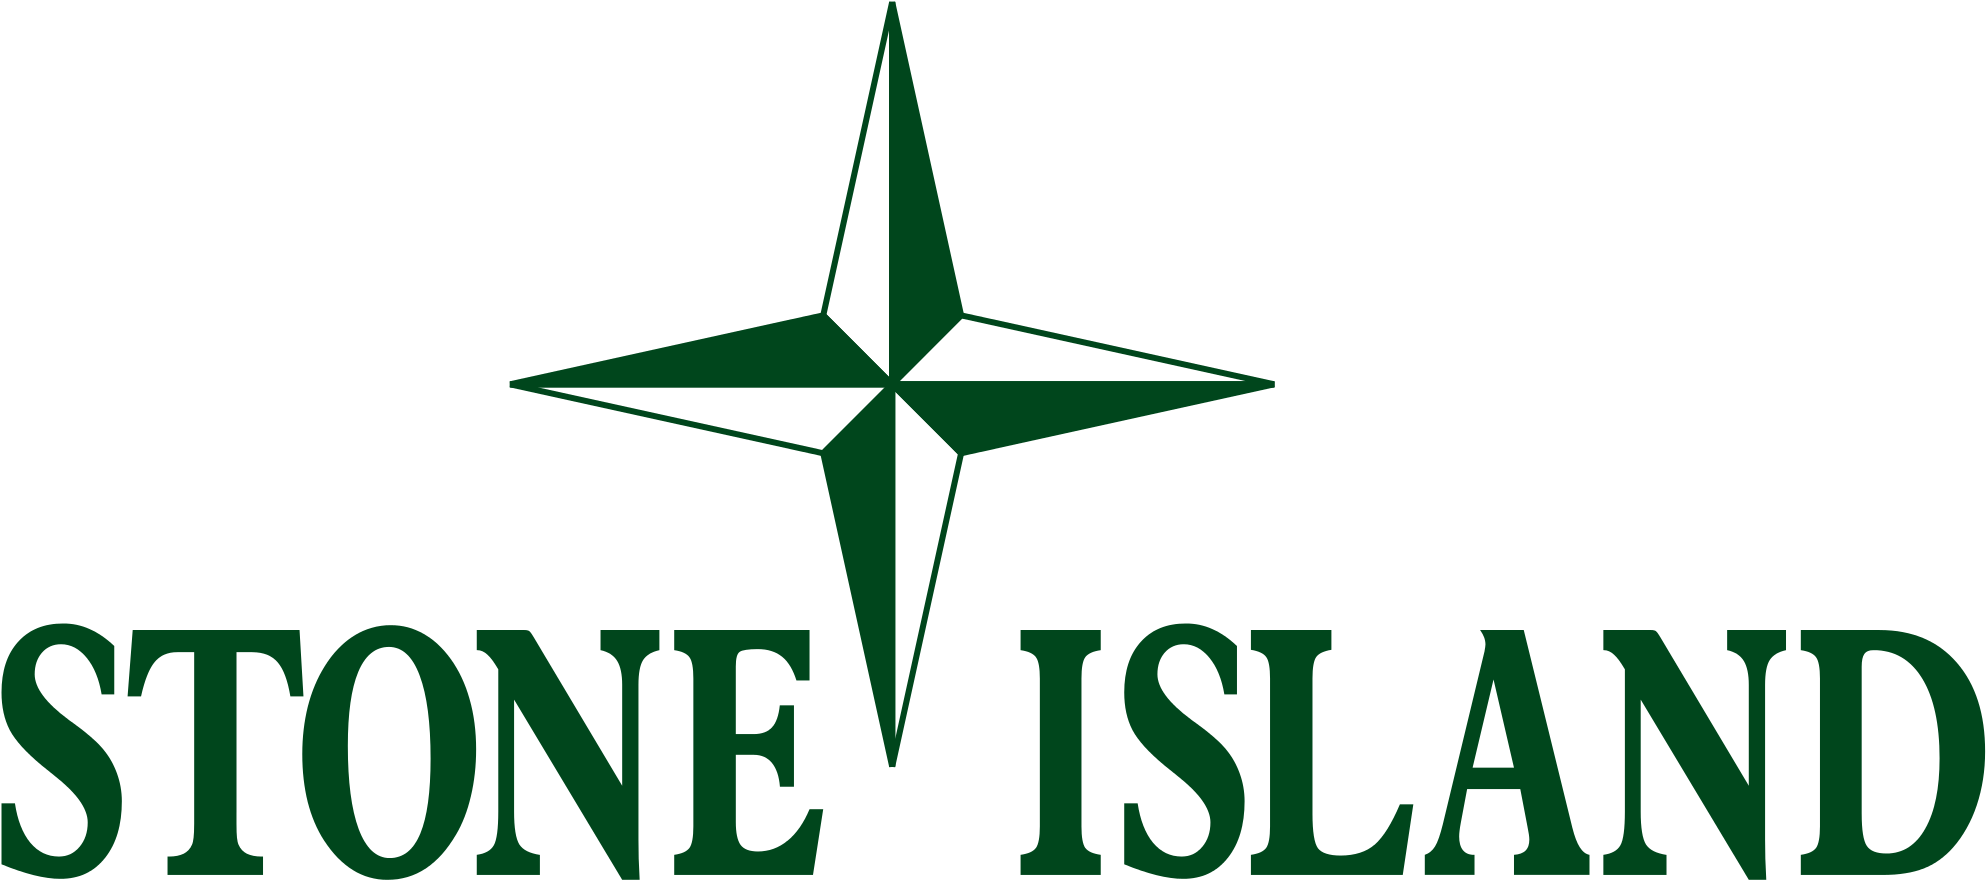 Значок stone. Stone Island вектор. Логотипсанайленд. Стон Исланд логотип. Stone Island лого вектор.